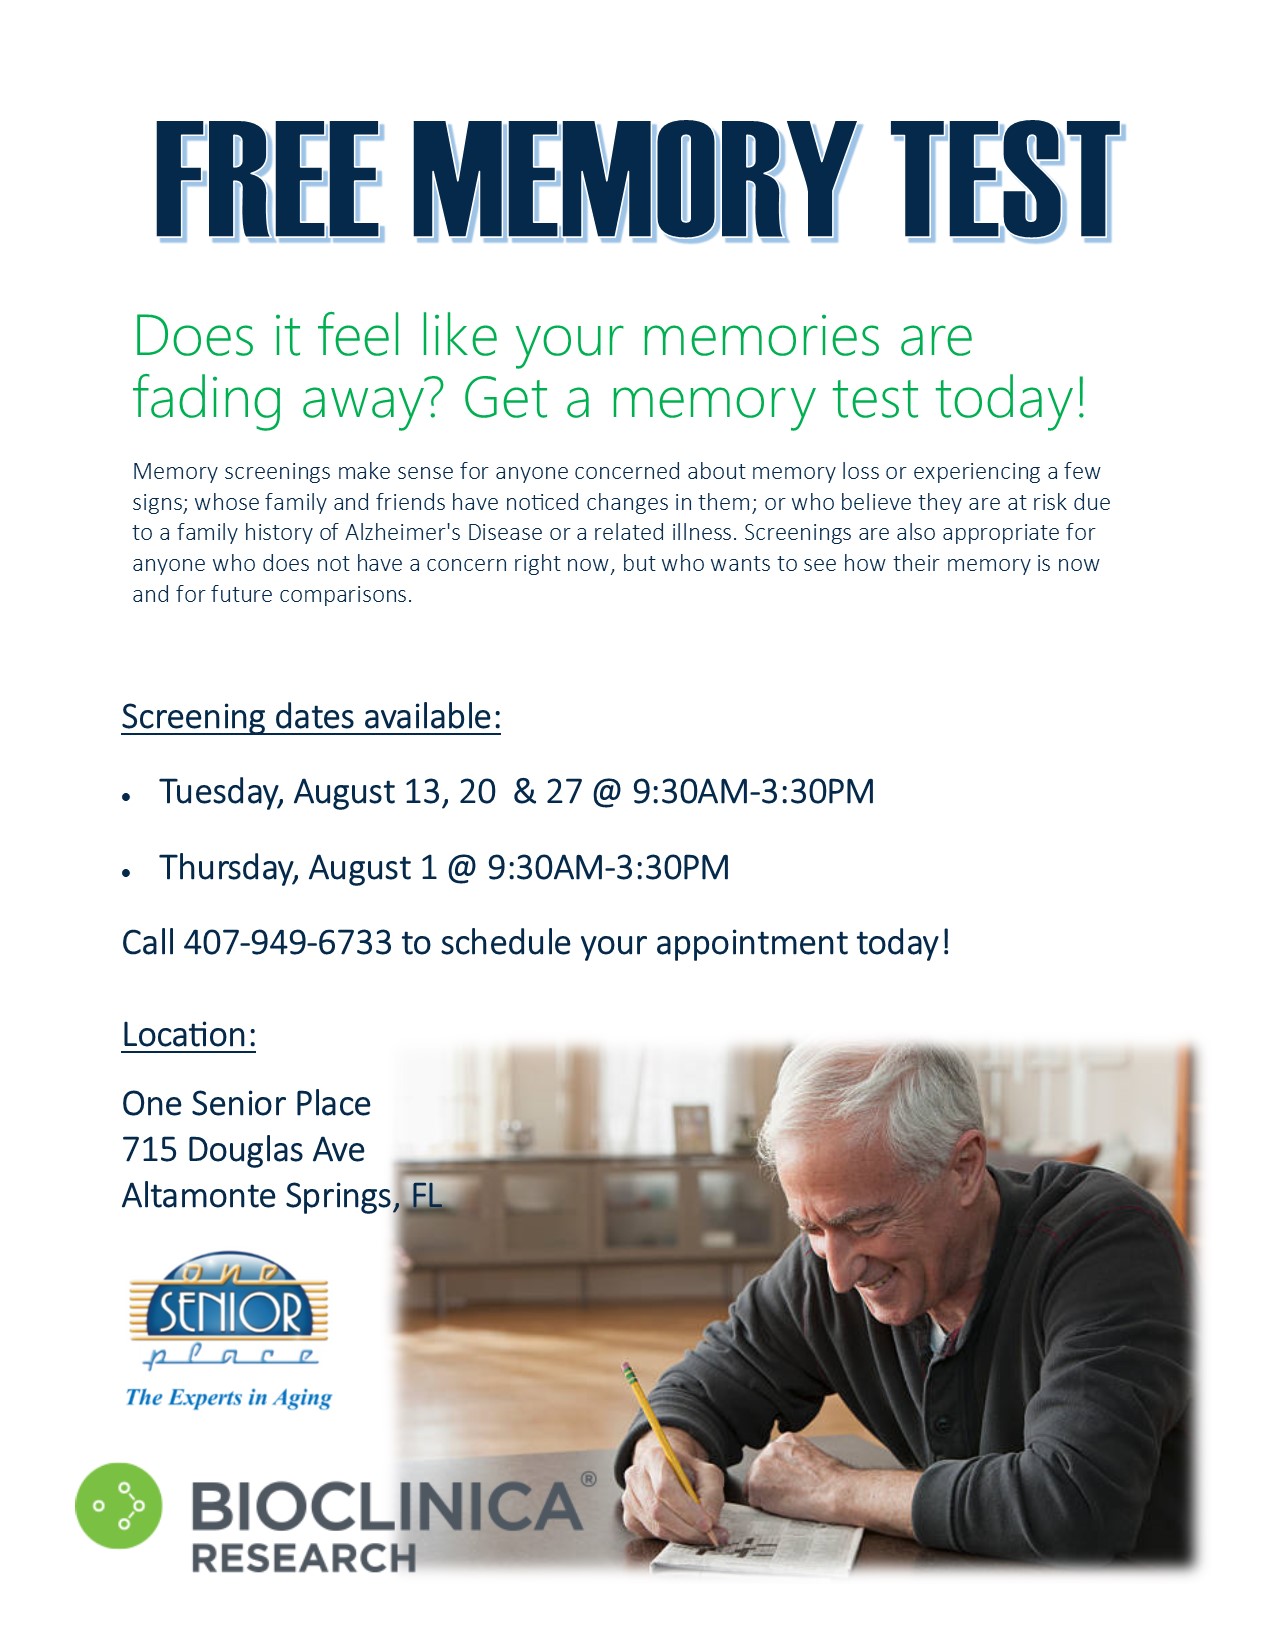 FREE Memory Screening